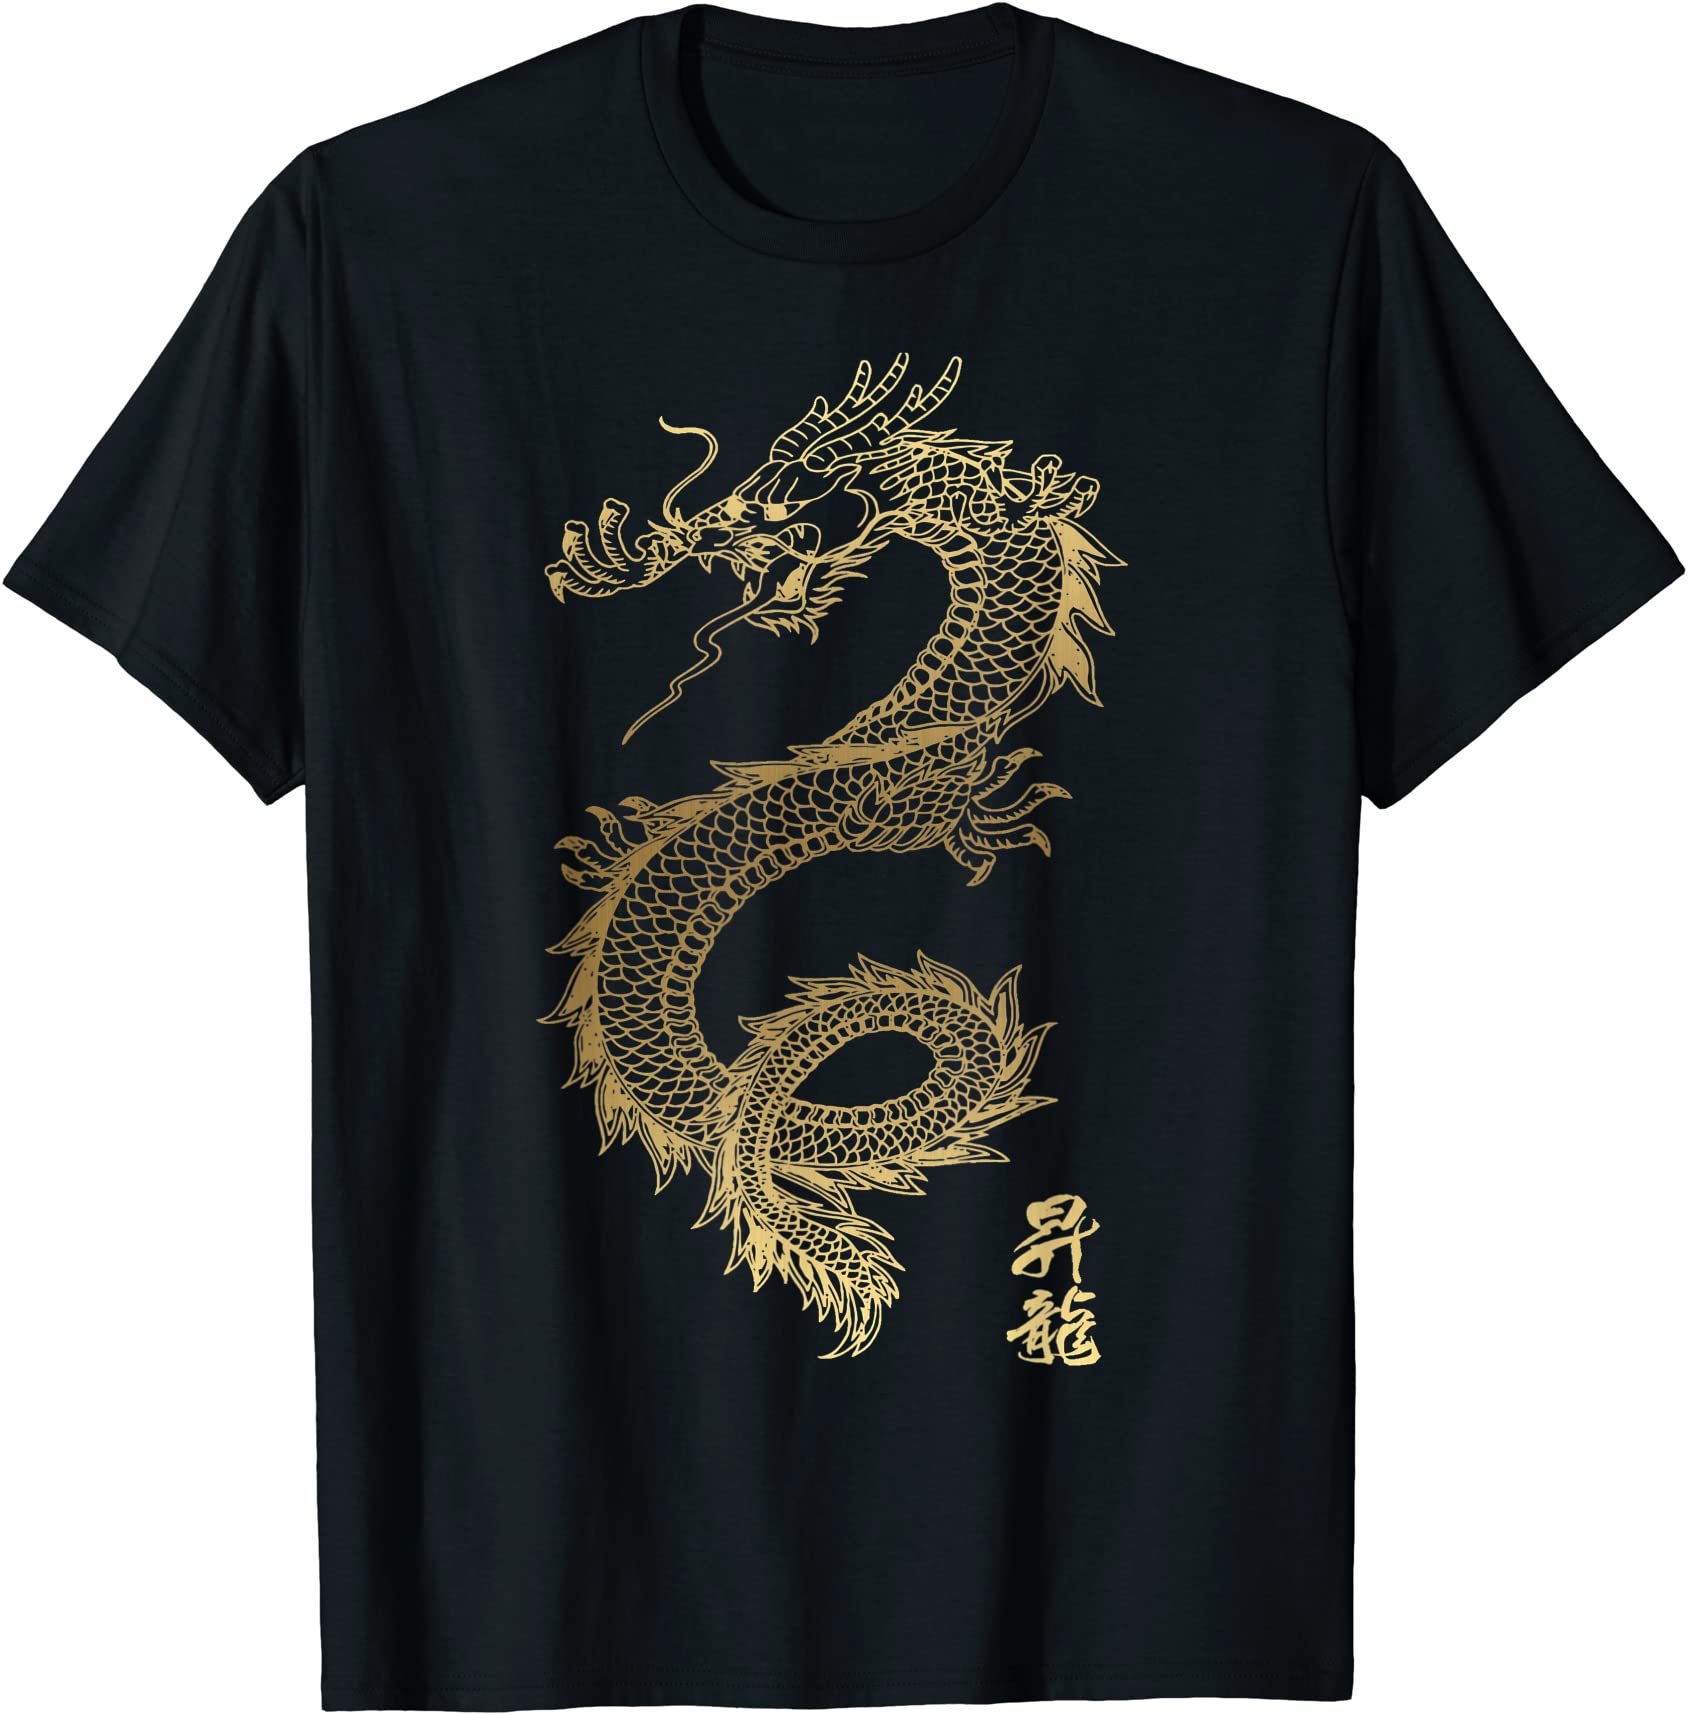 cool chinese dragon t shirt men - Buy t-shirt designs